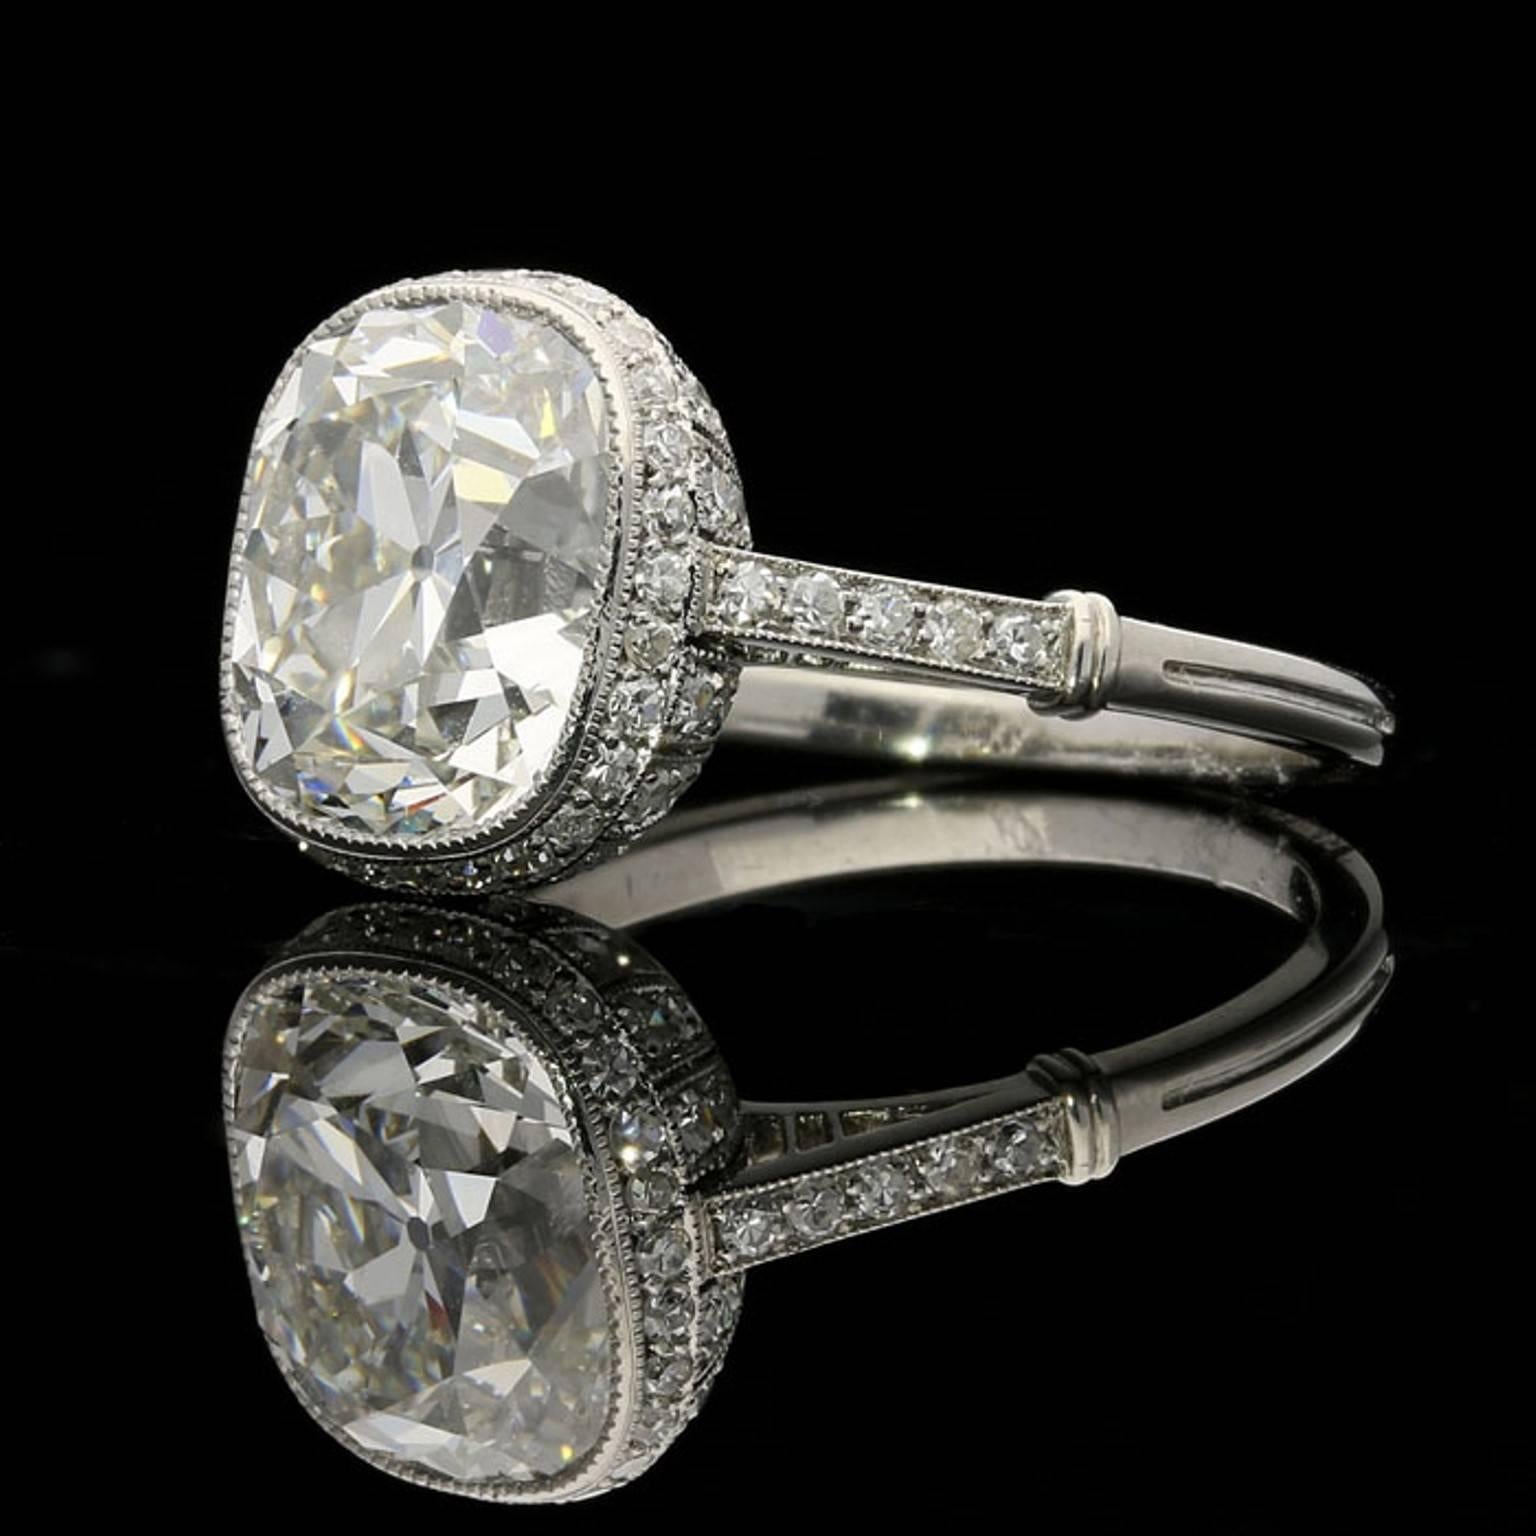 Contemporary Hancocks 4.14 carat Old Mine cut Platinum diamond solitaire ring